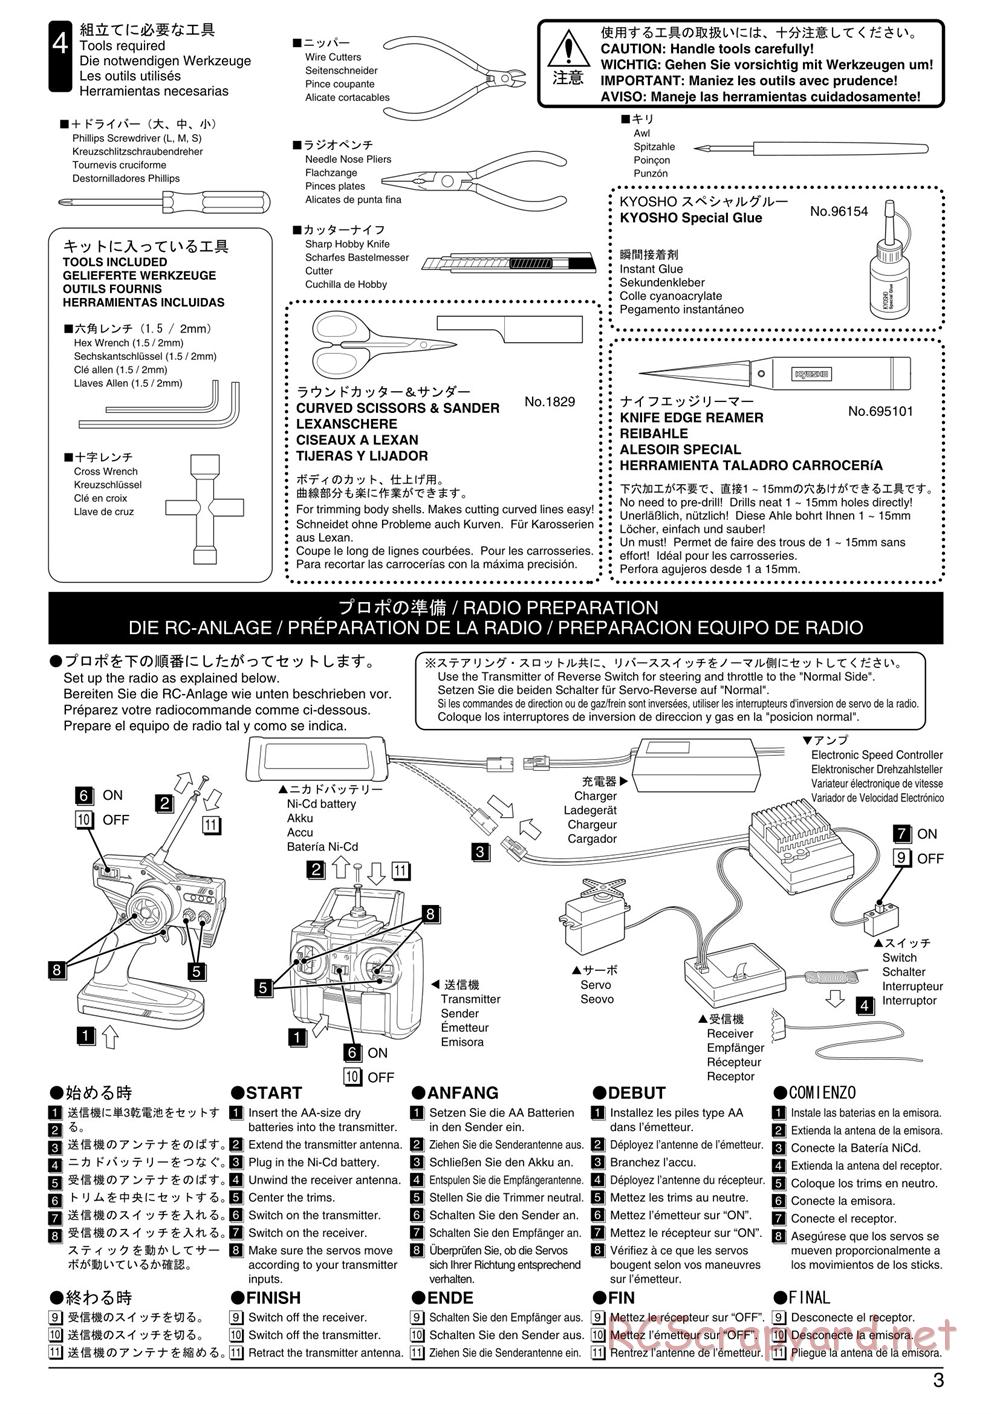 Kyosho - PureTen EP Alpha 3 - Manual - Page 3